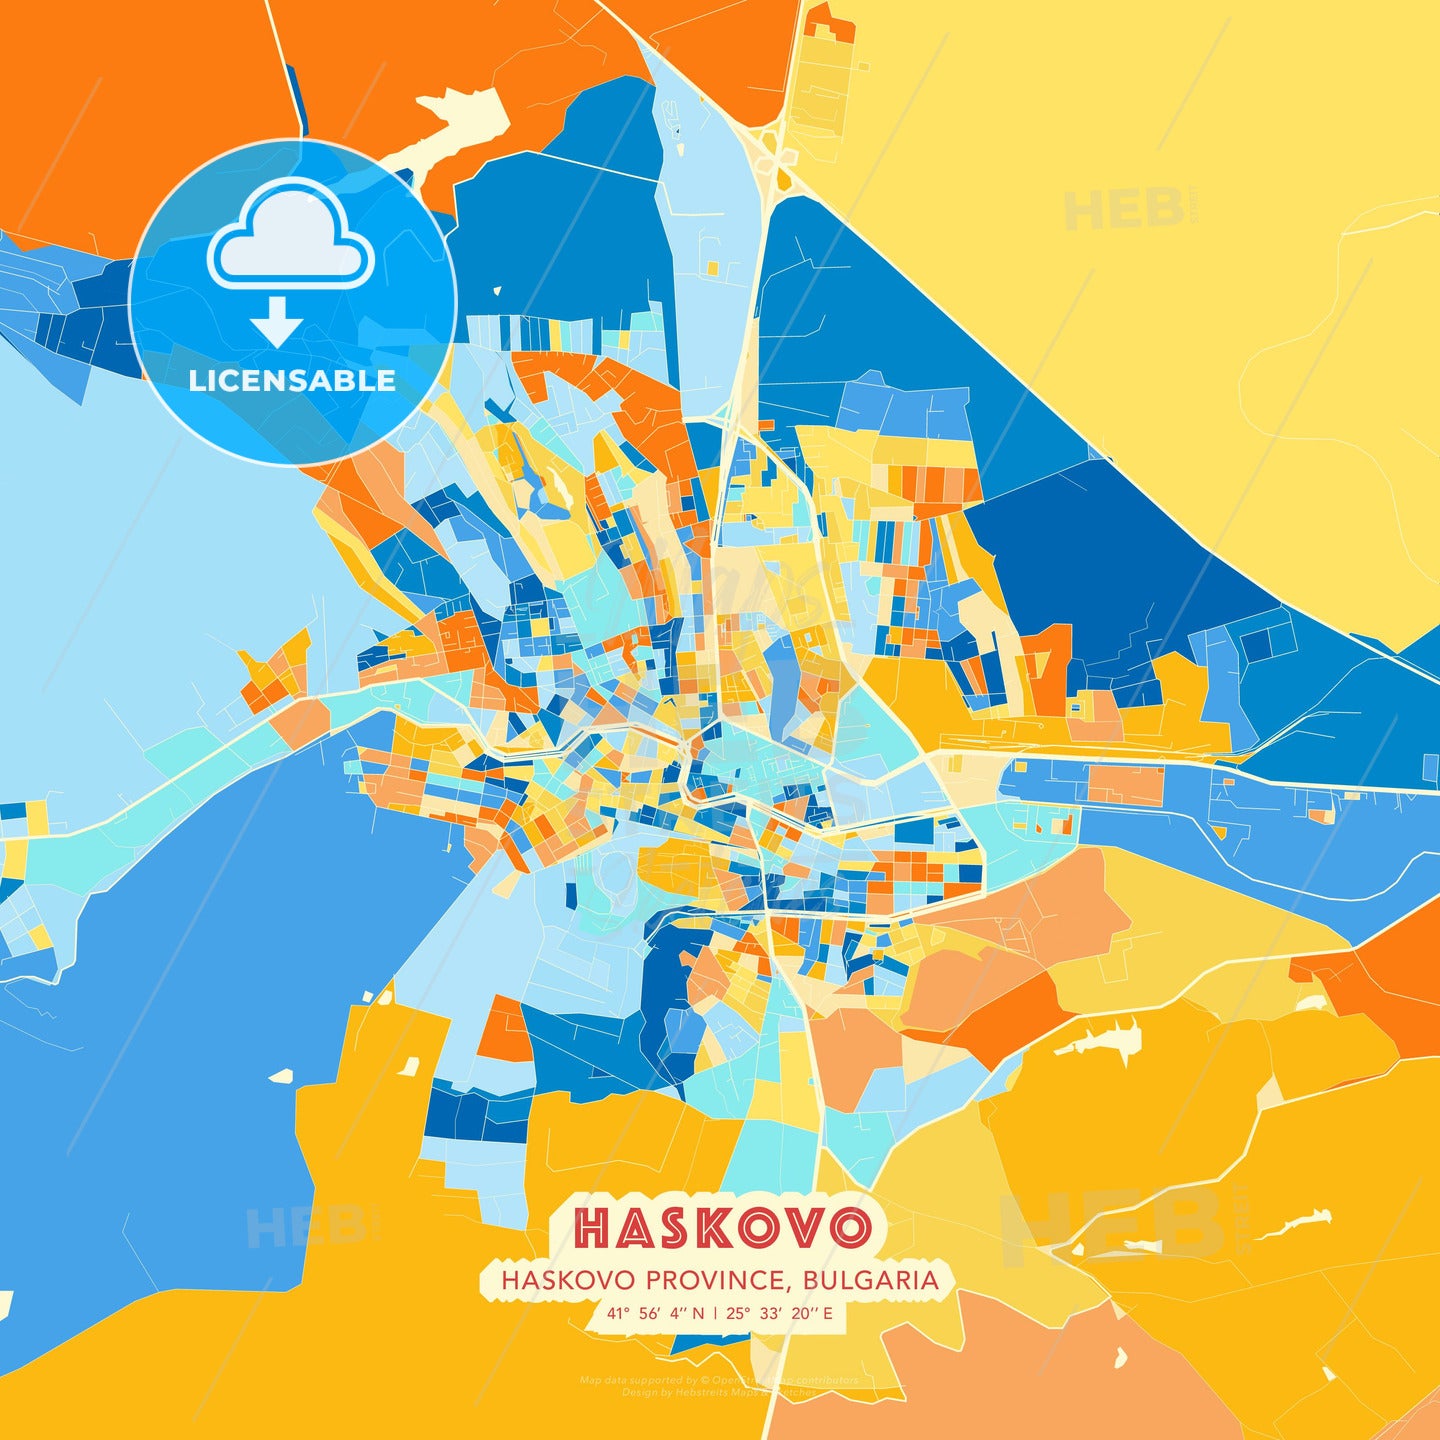 Haskovo, Haskovo Province, Bulgaria, map - HEBSTREITS Sketches